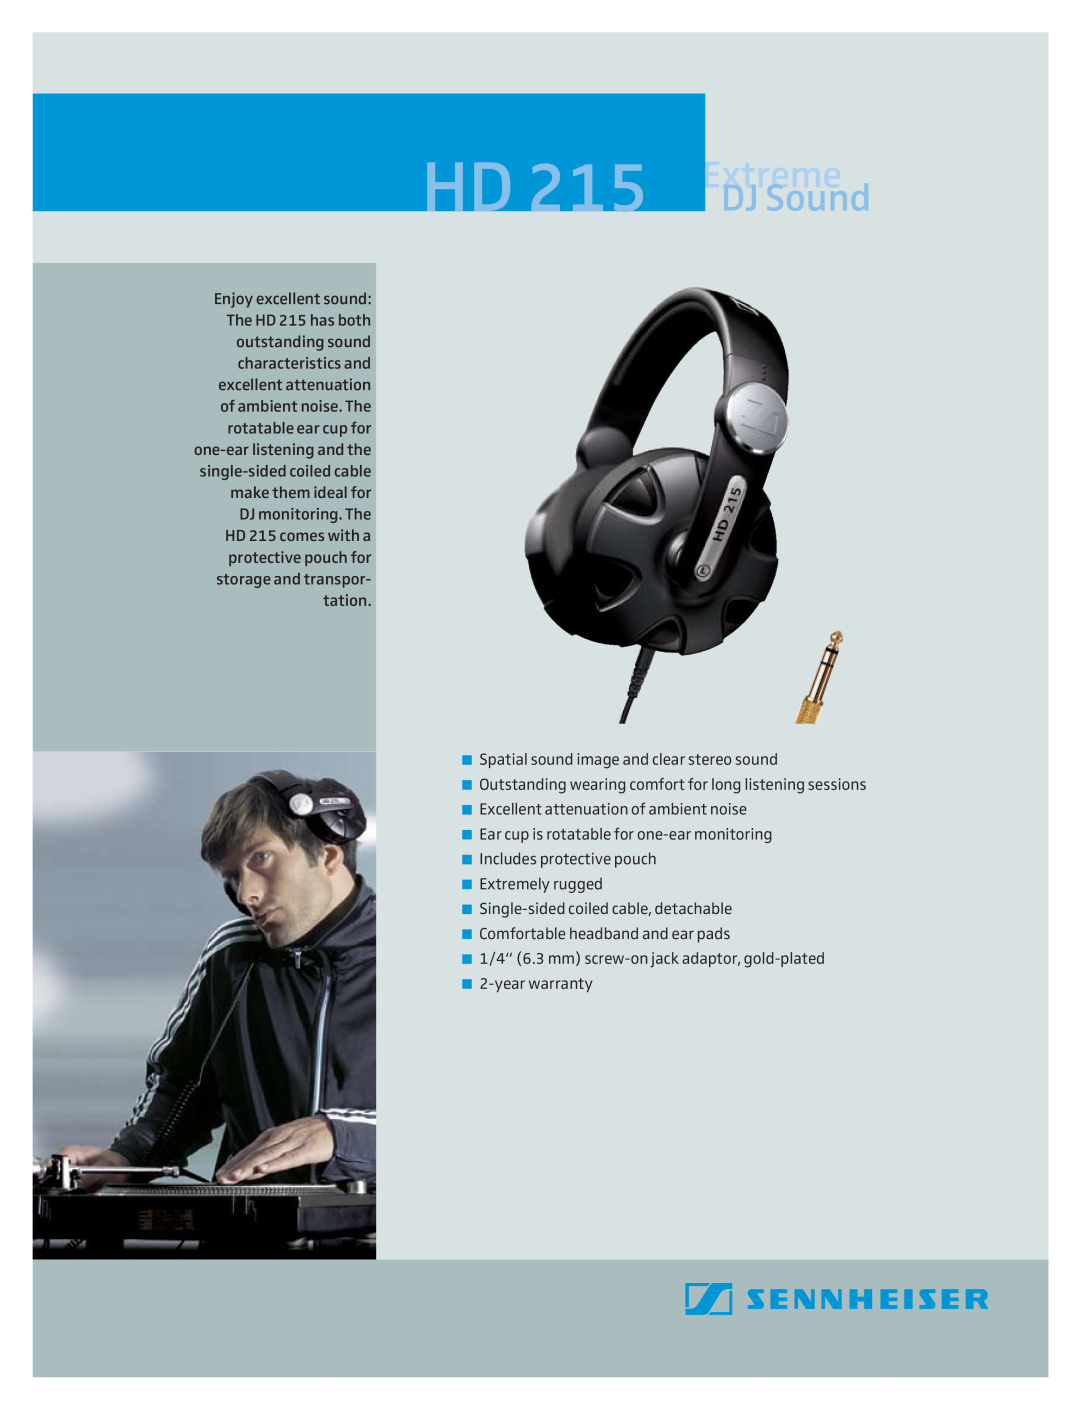 Sennheiser warranty HD 215 Extreme, DJ Sound 